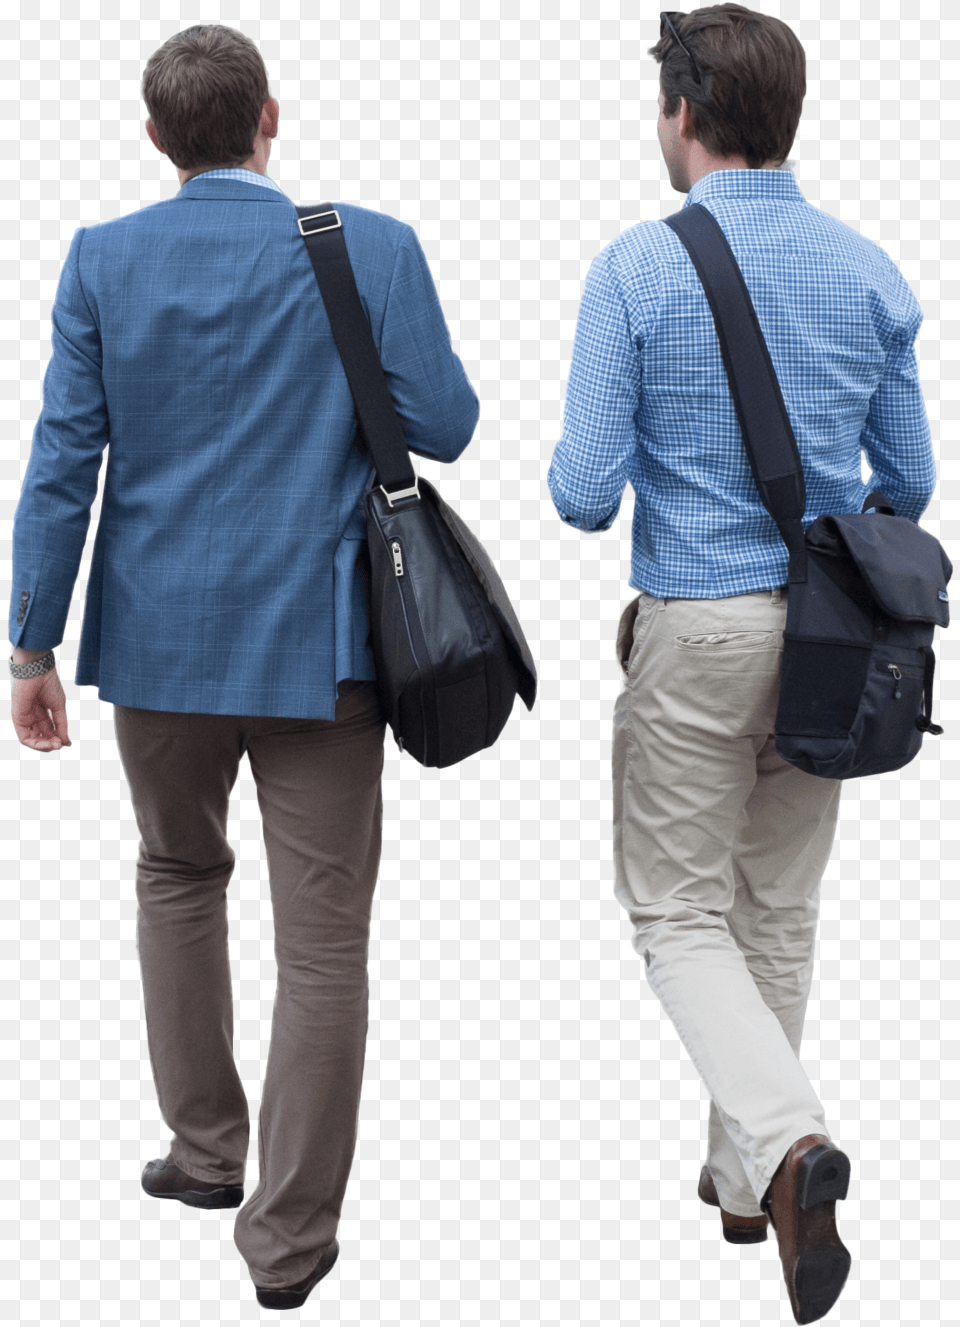 People Walking Away, Bag, Clothing, Sleeve, Pants Png Image